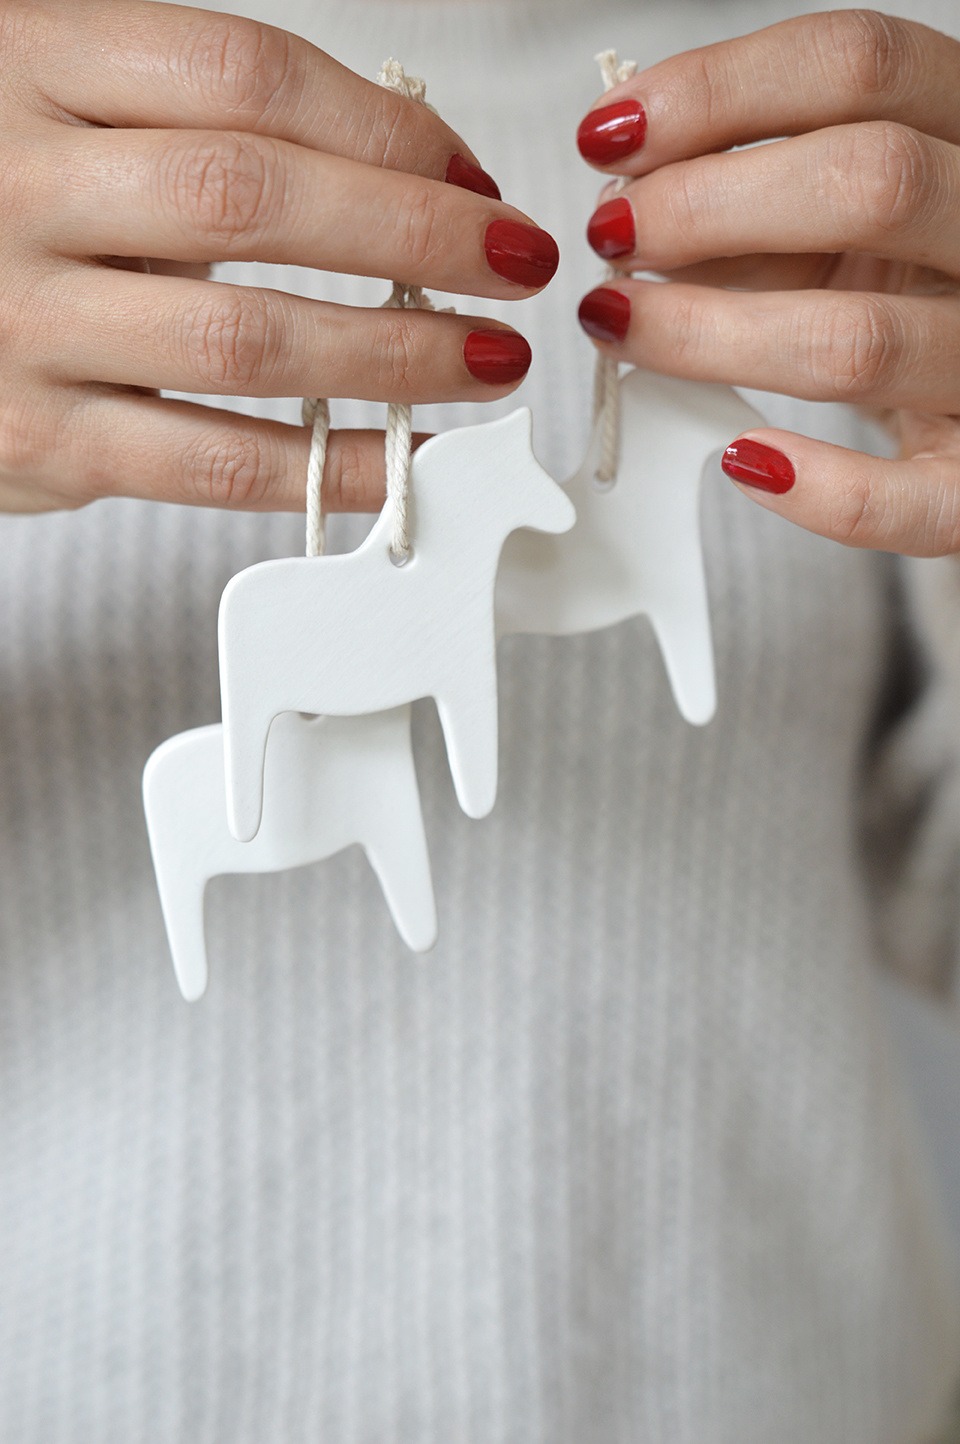 clay dala horse ornament product photo